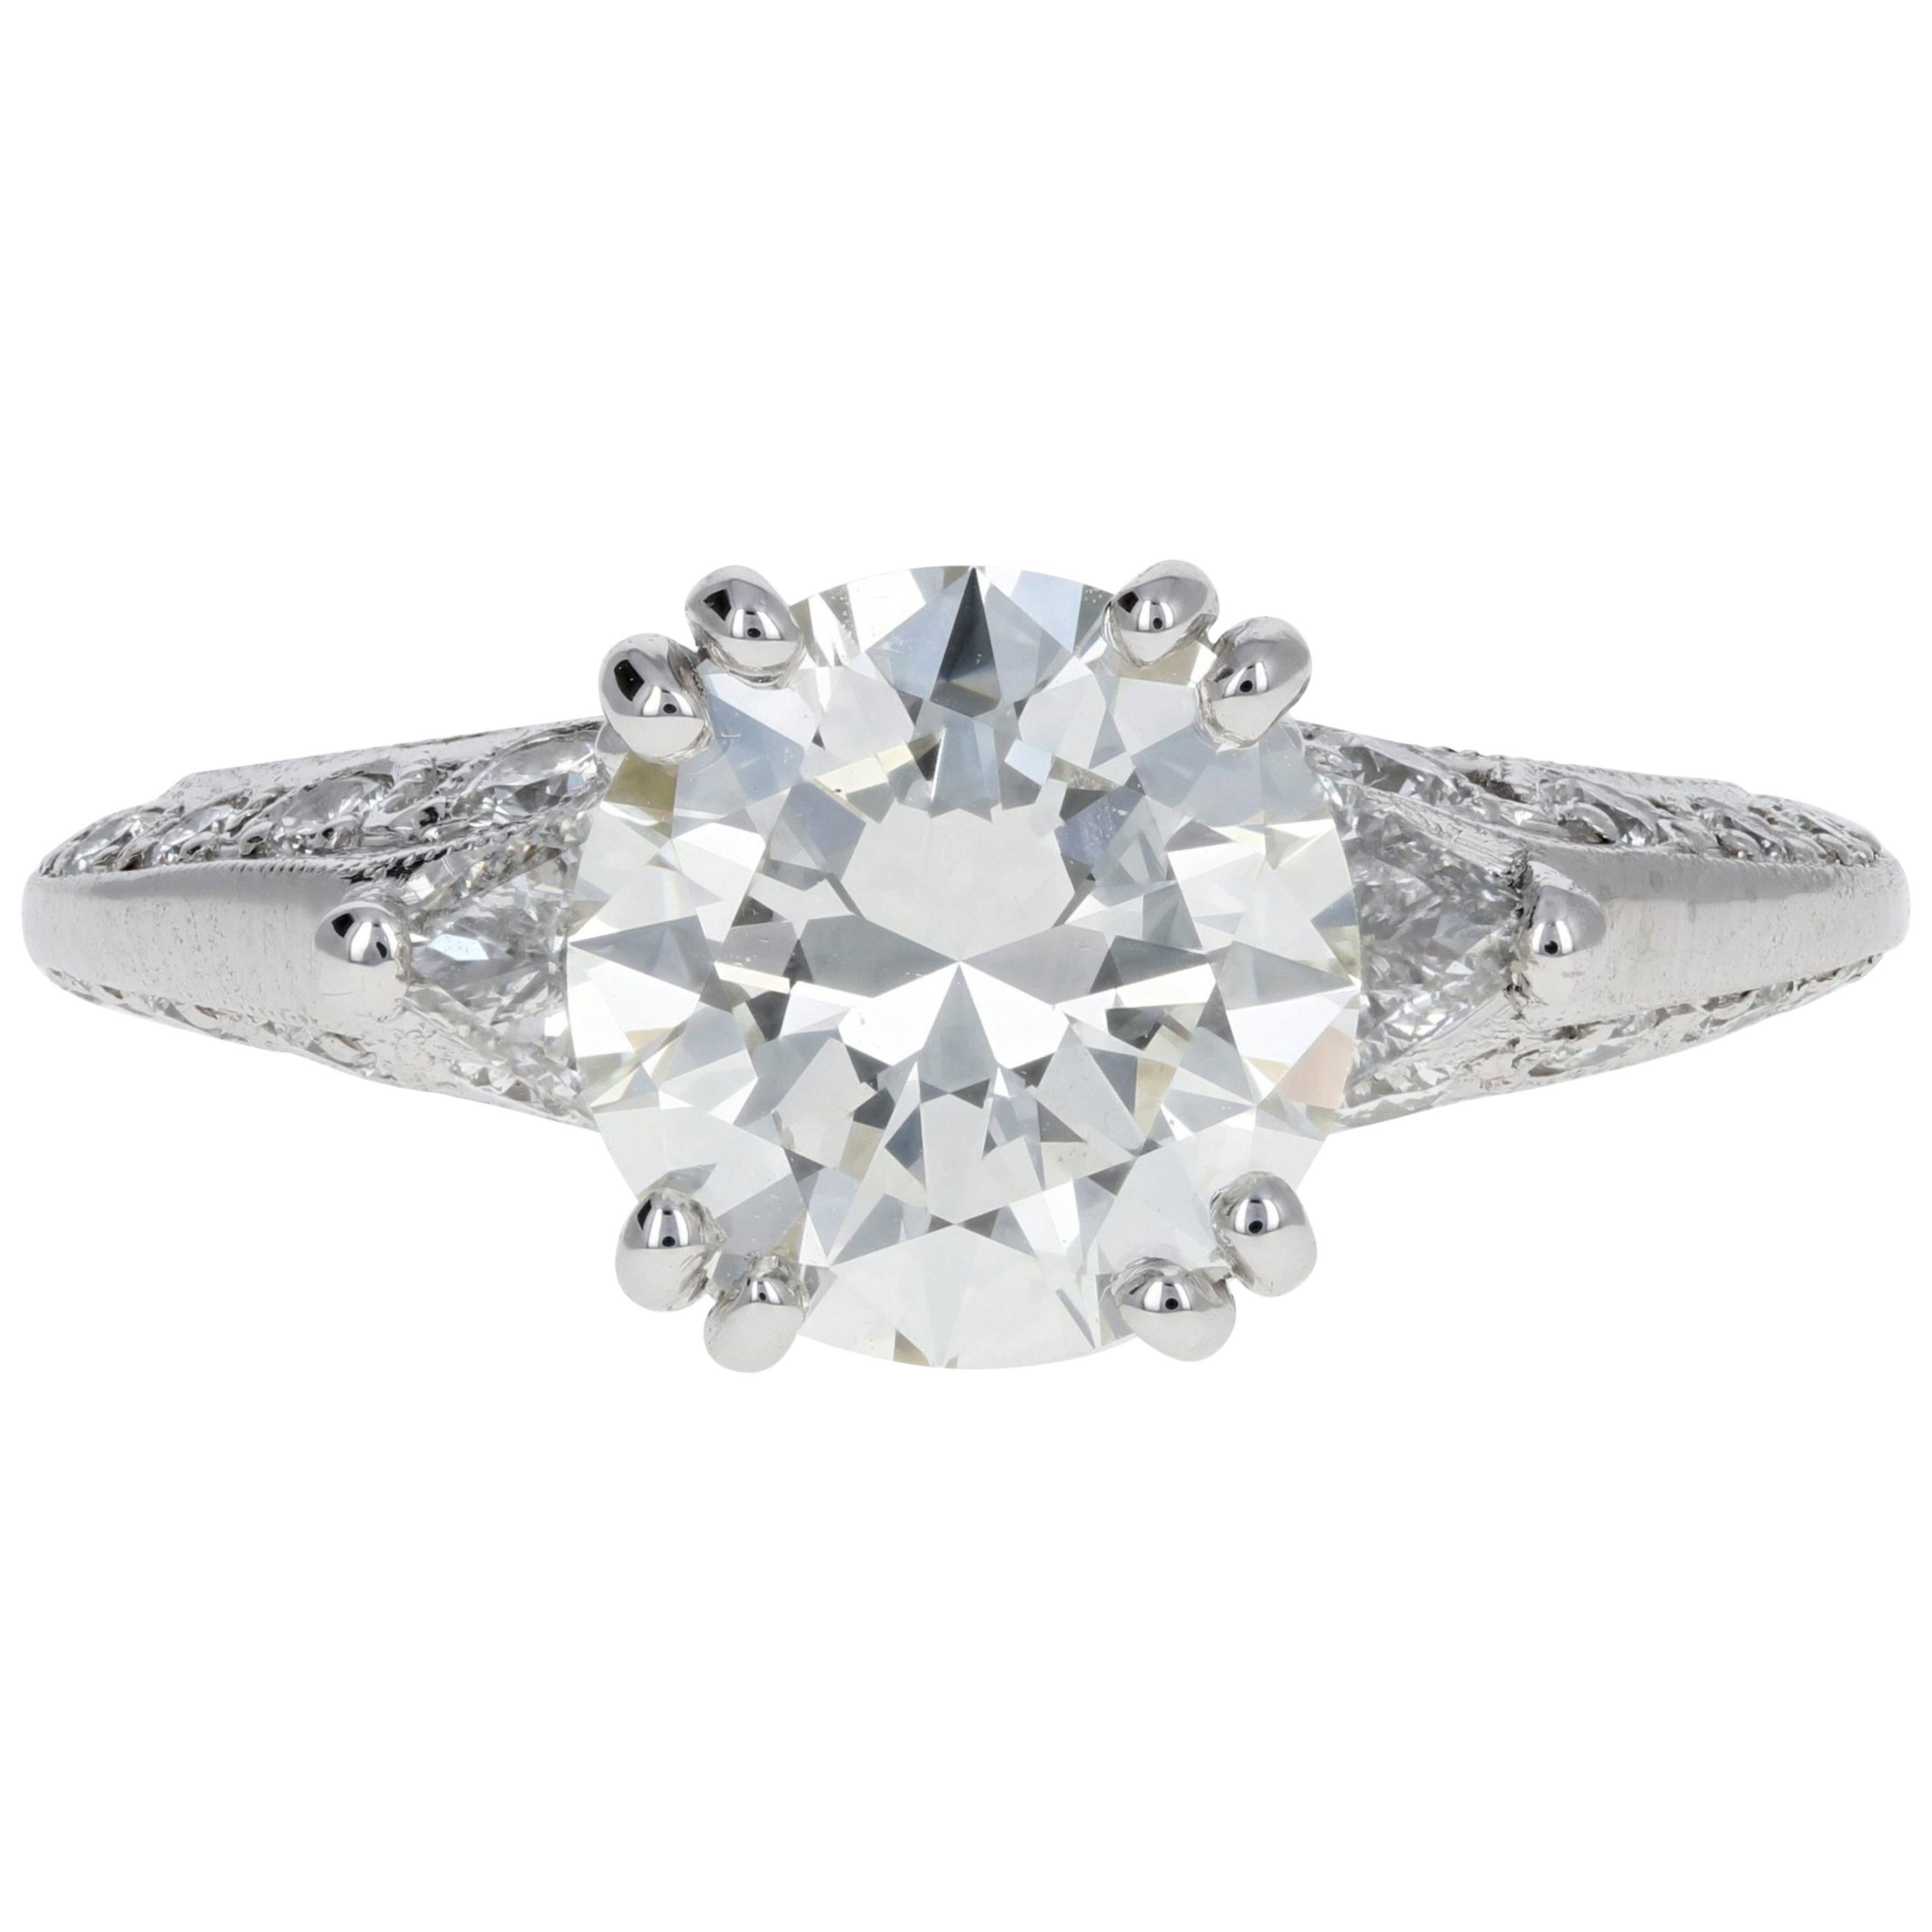 Tacori Platinum 2.3 Carat Diamond Ring GIA Certified